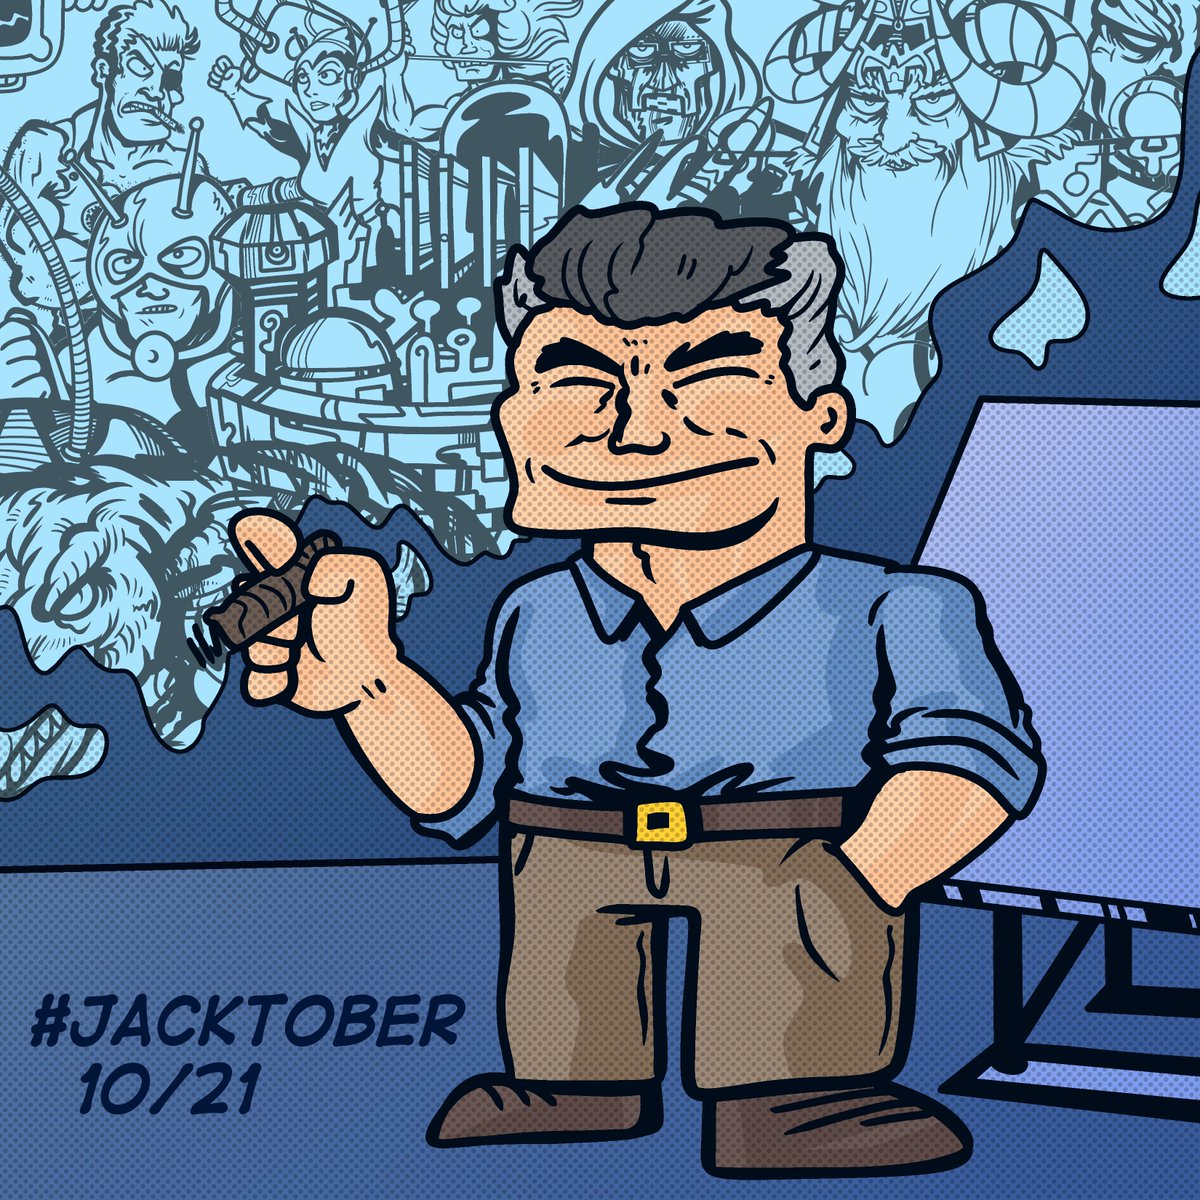 #jacktober 10/21
Jack Kirby